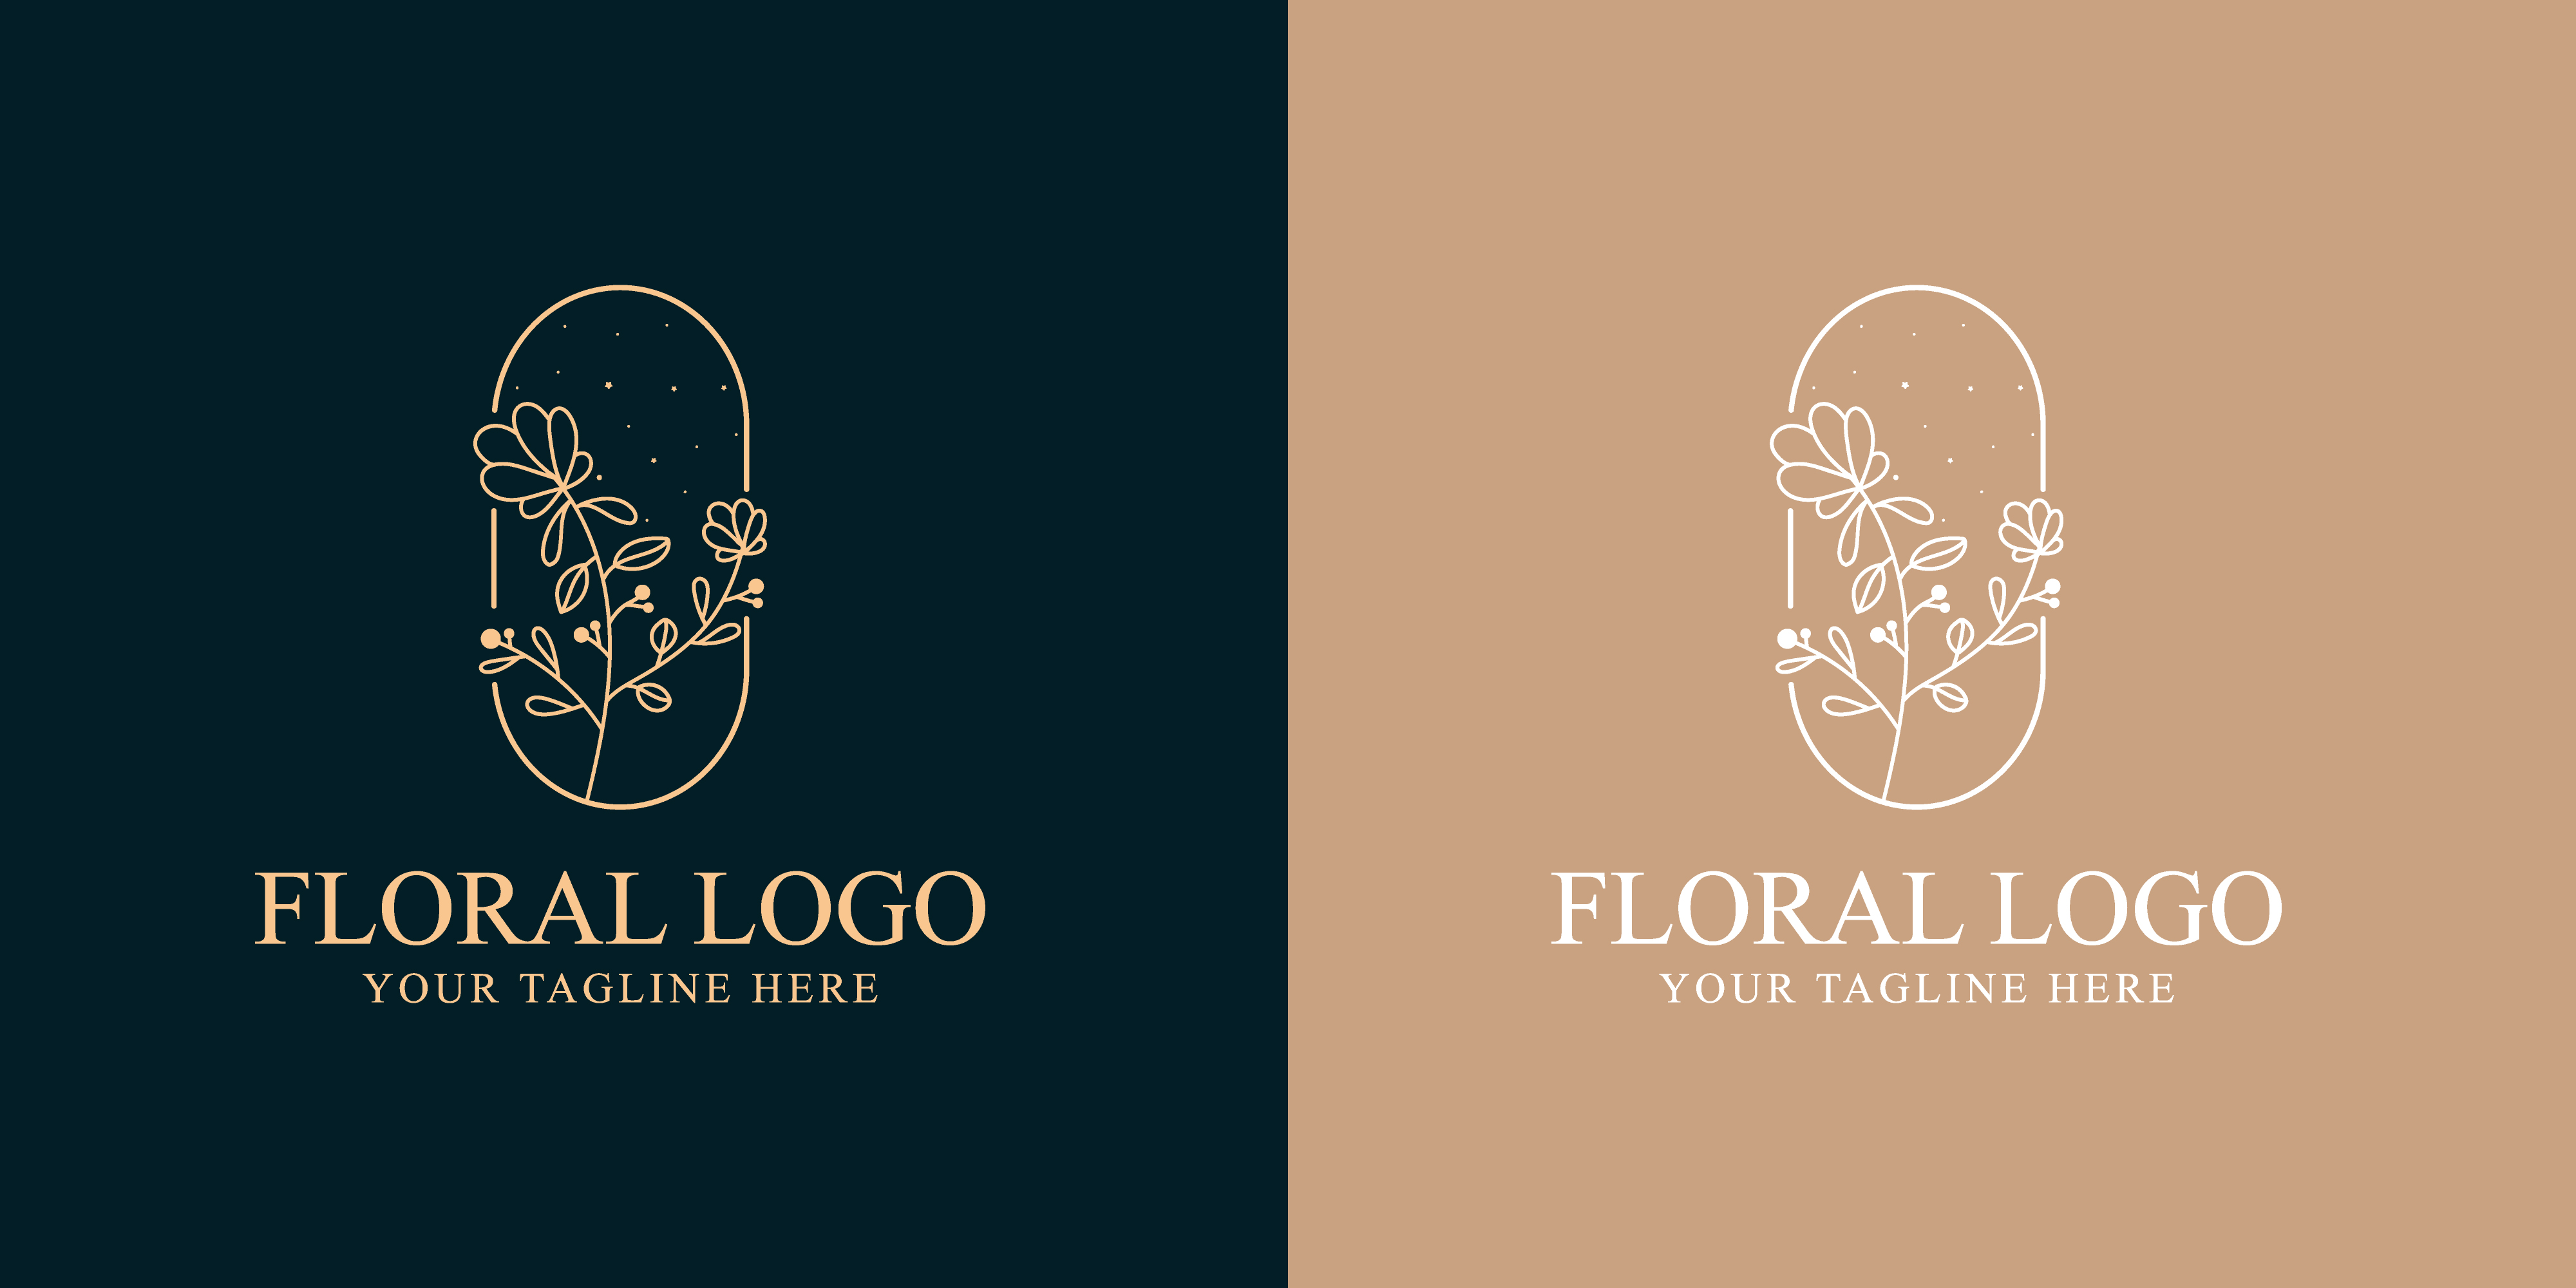 create minimalist logo design for branding